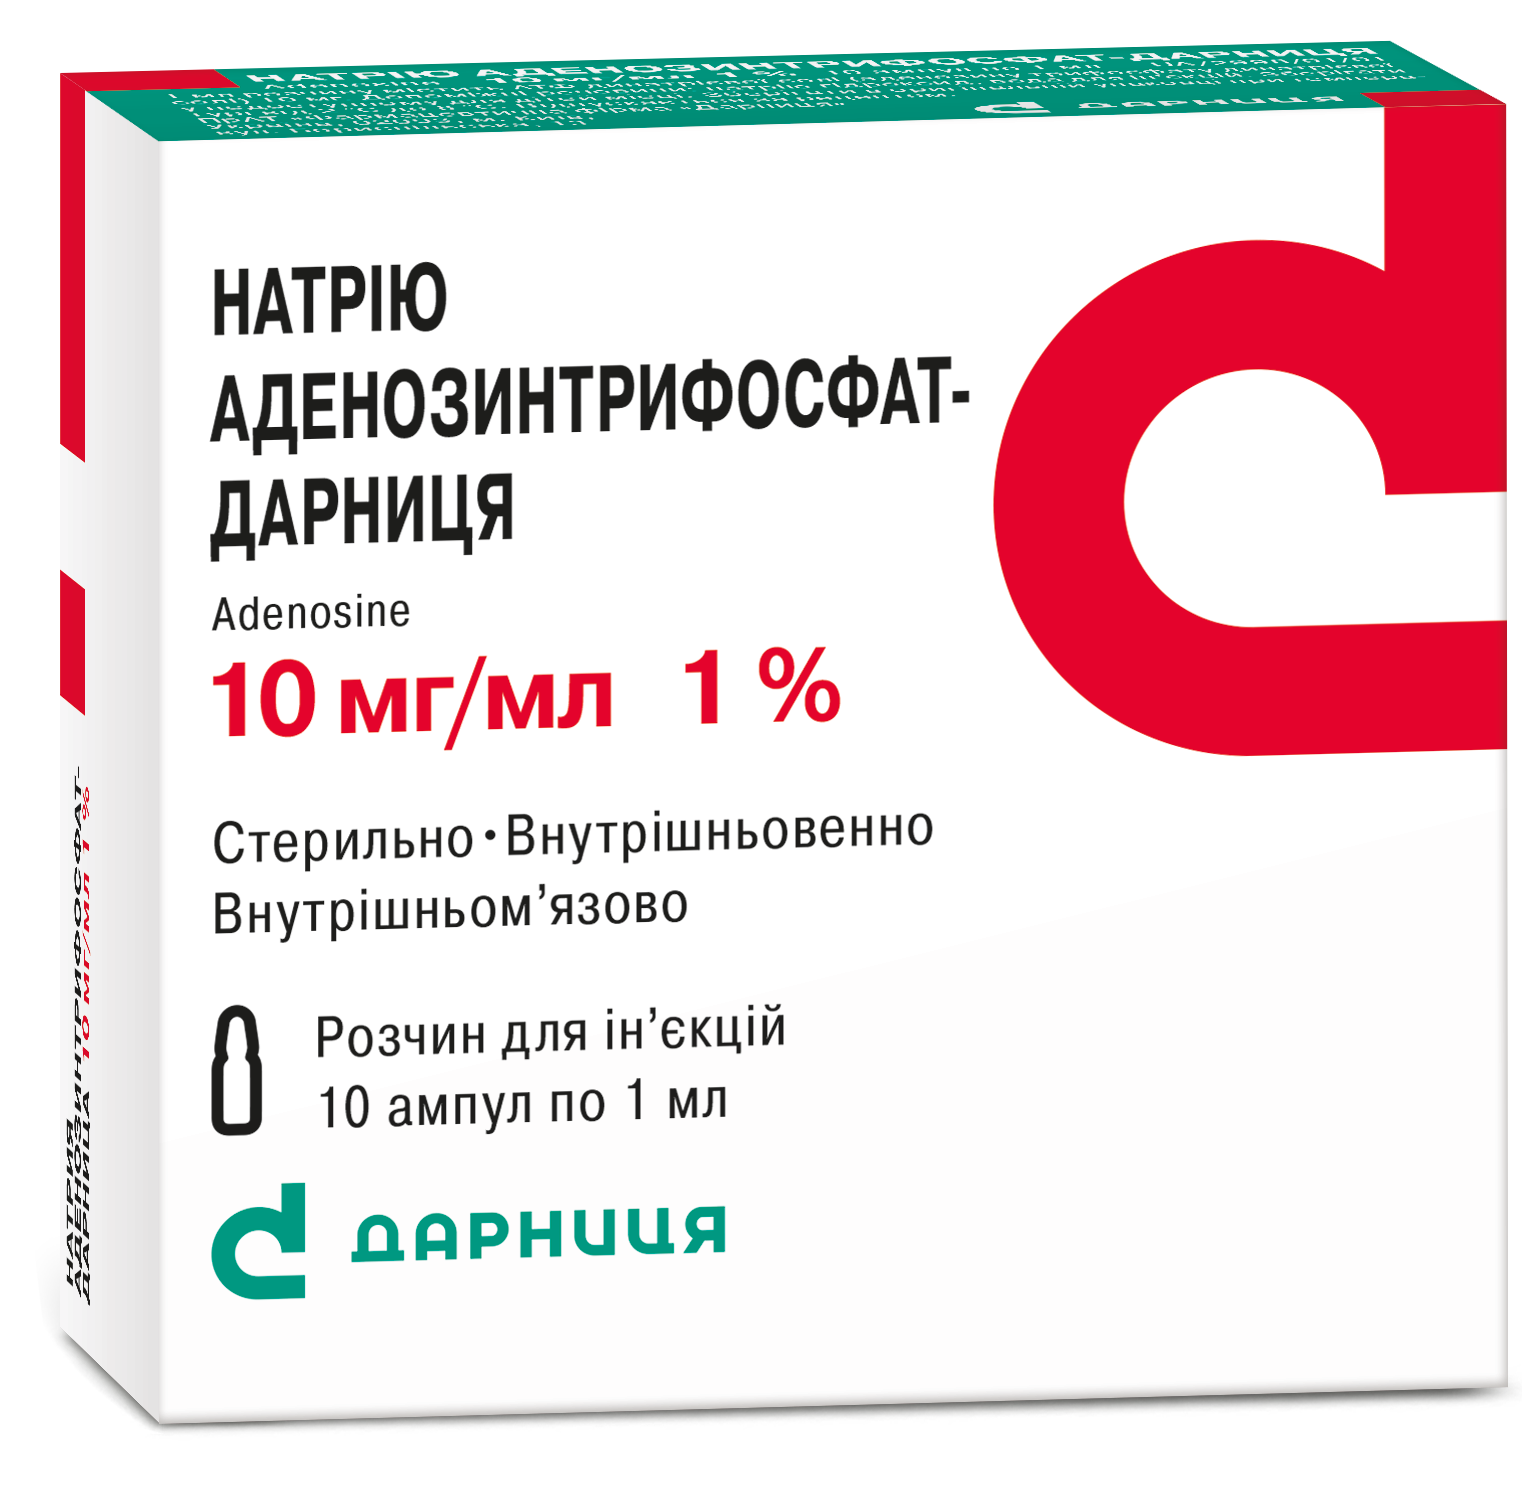 Sodium adenosintriphosphate-Darnitsa